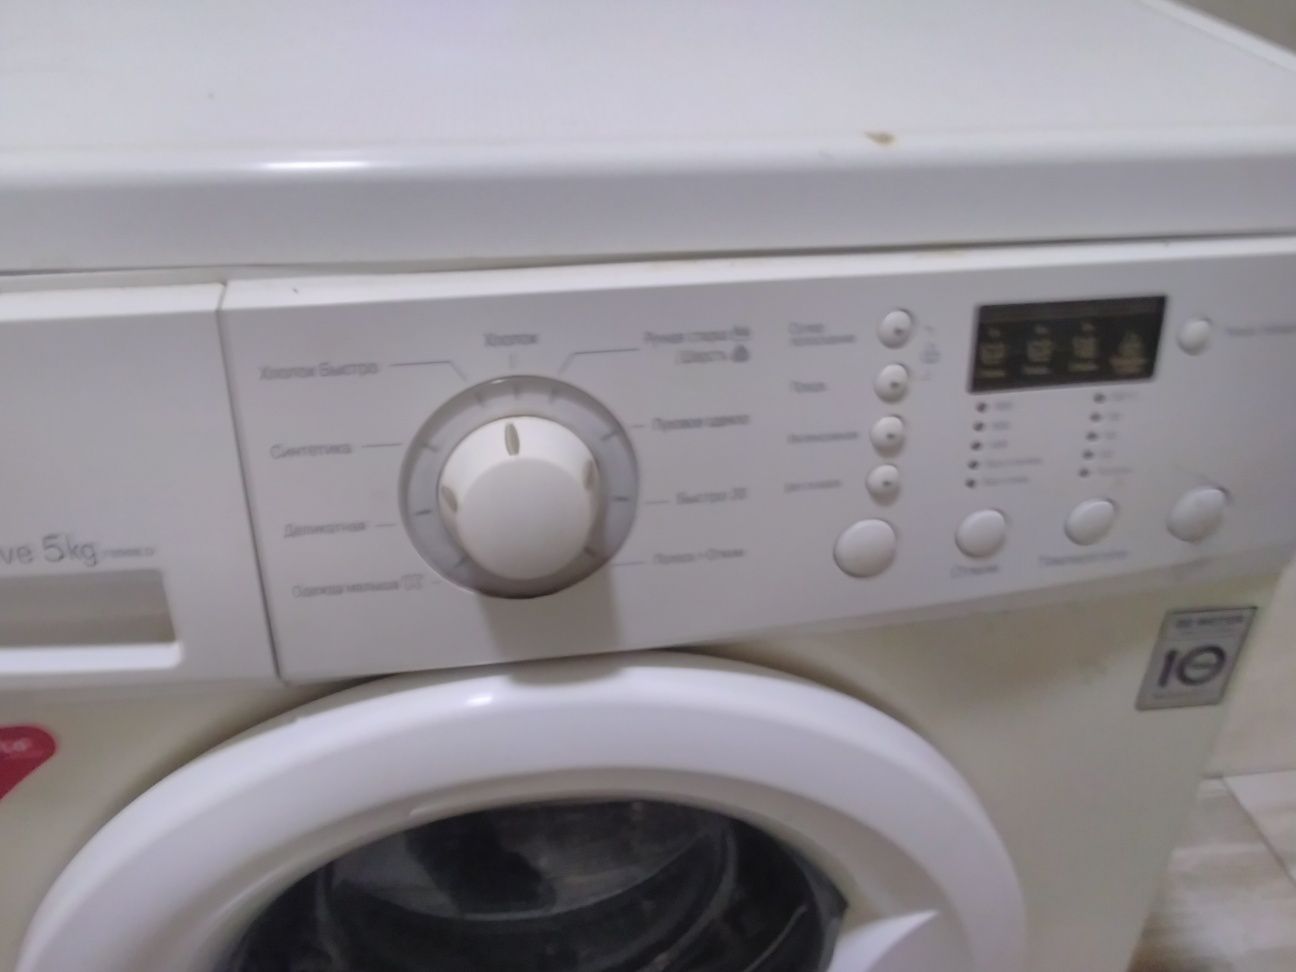 Продам пральну машинку LG